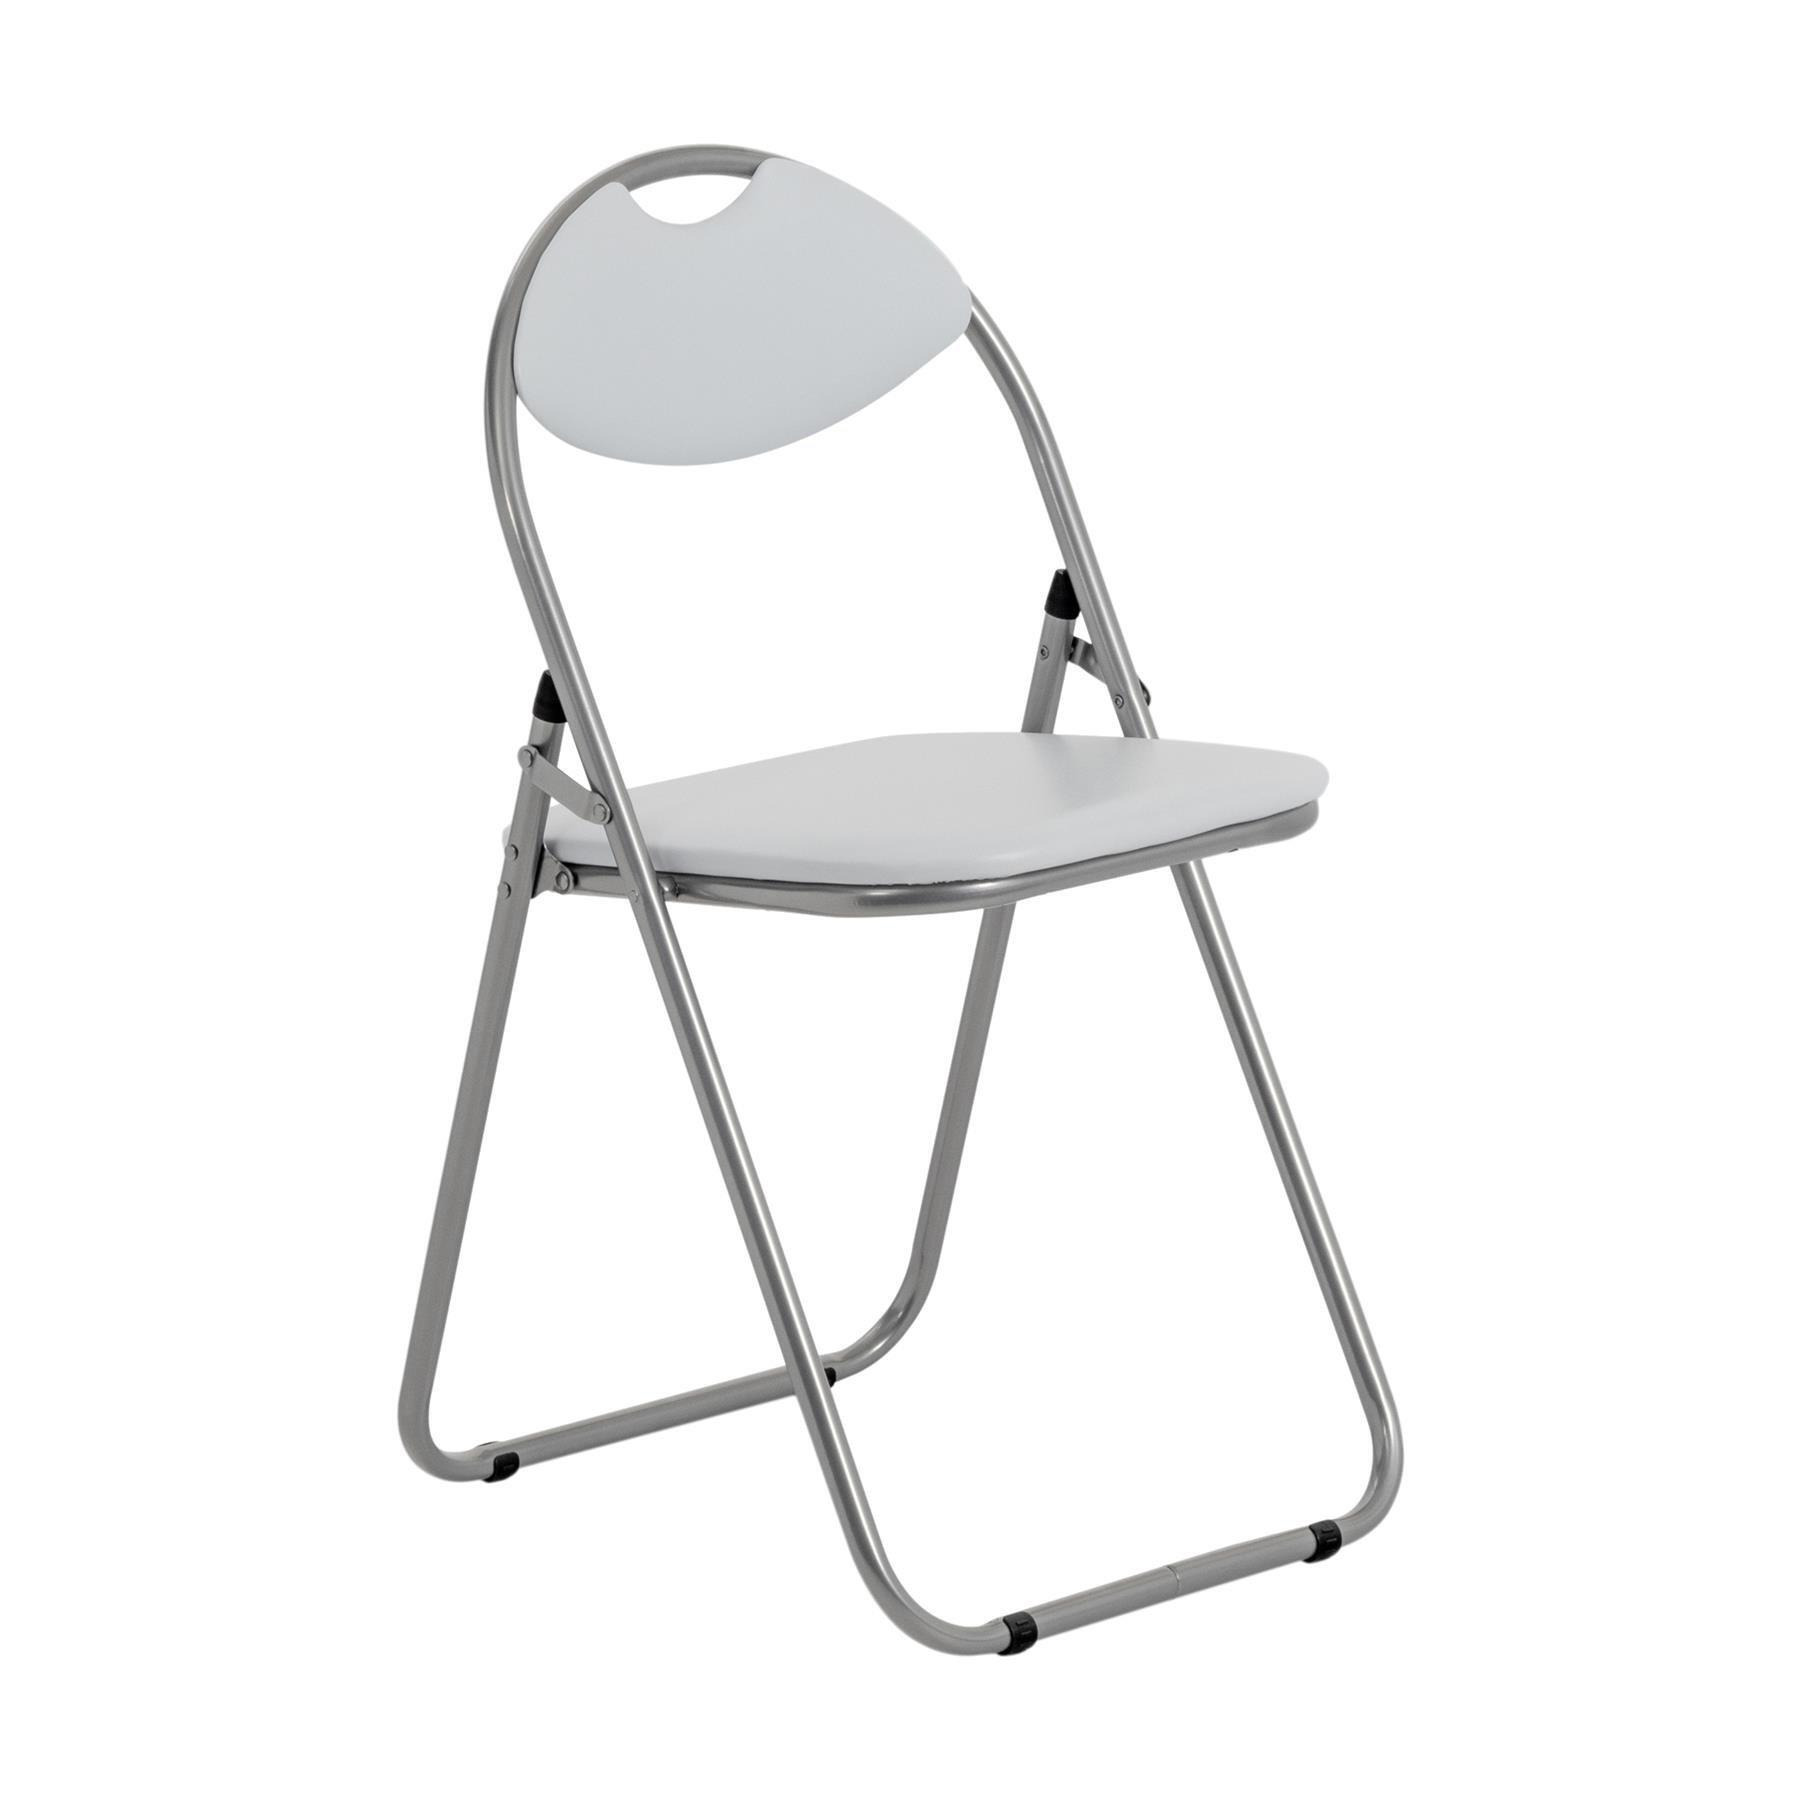 Padded Folding Desk Chair - image 1